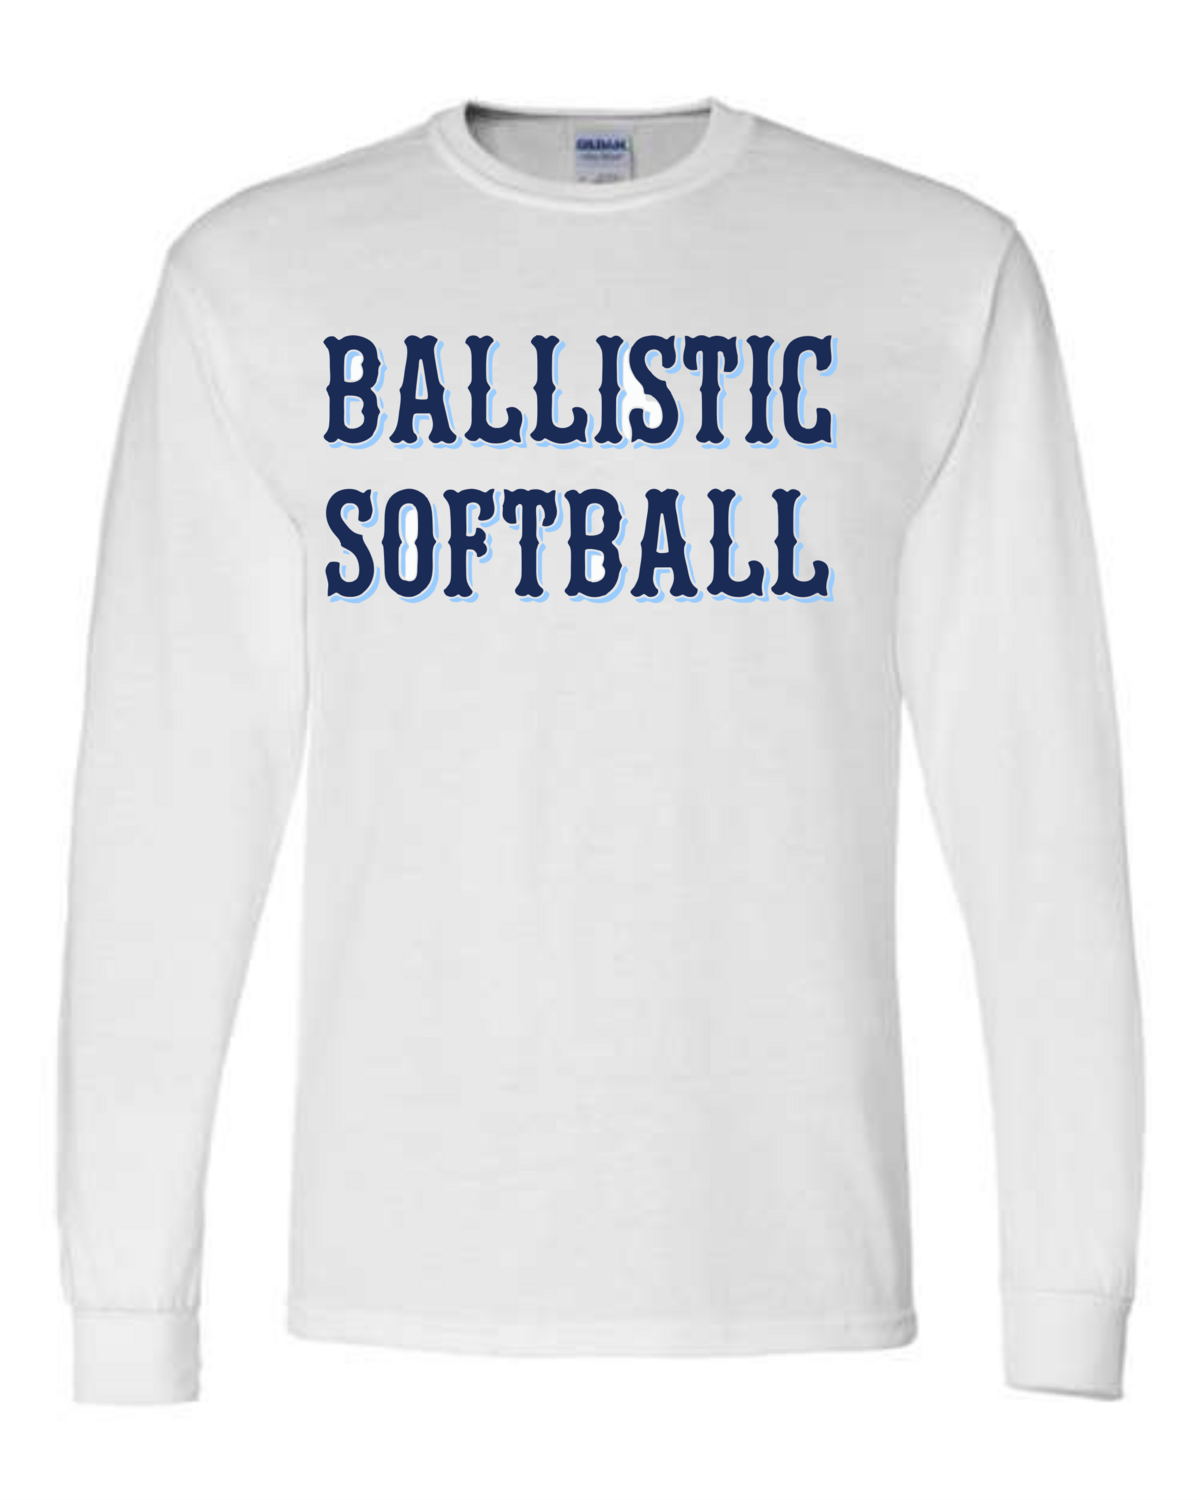 Ballistic Softball White Cotton Long Sleeve